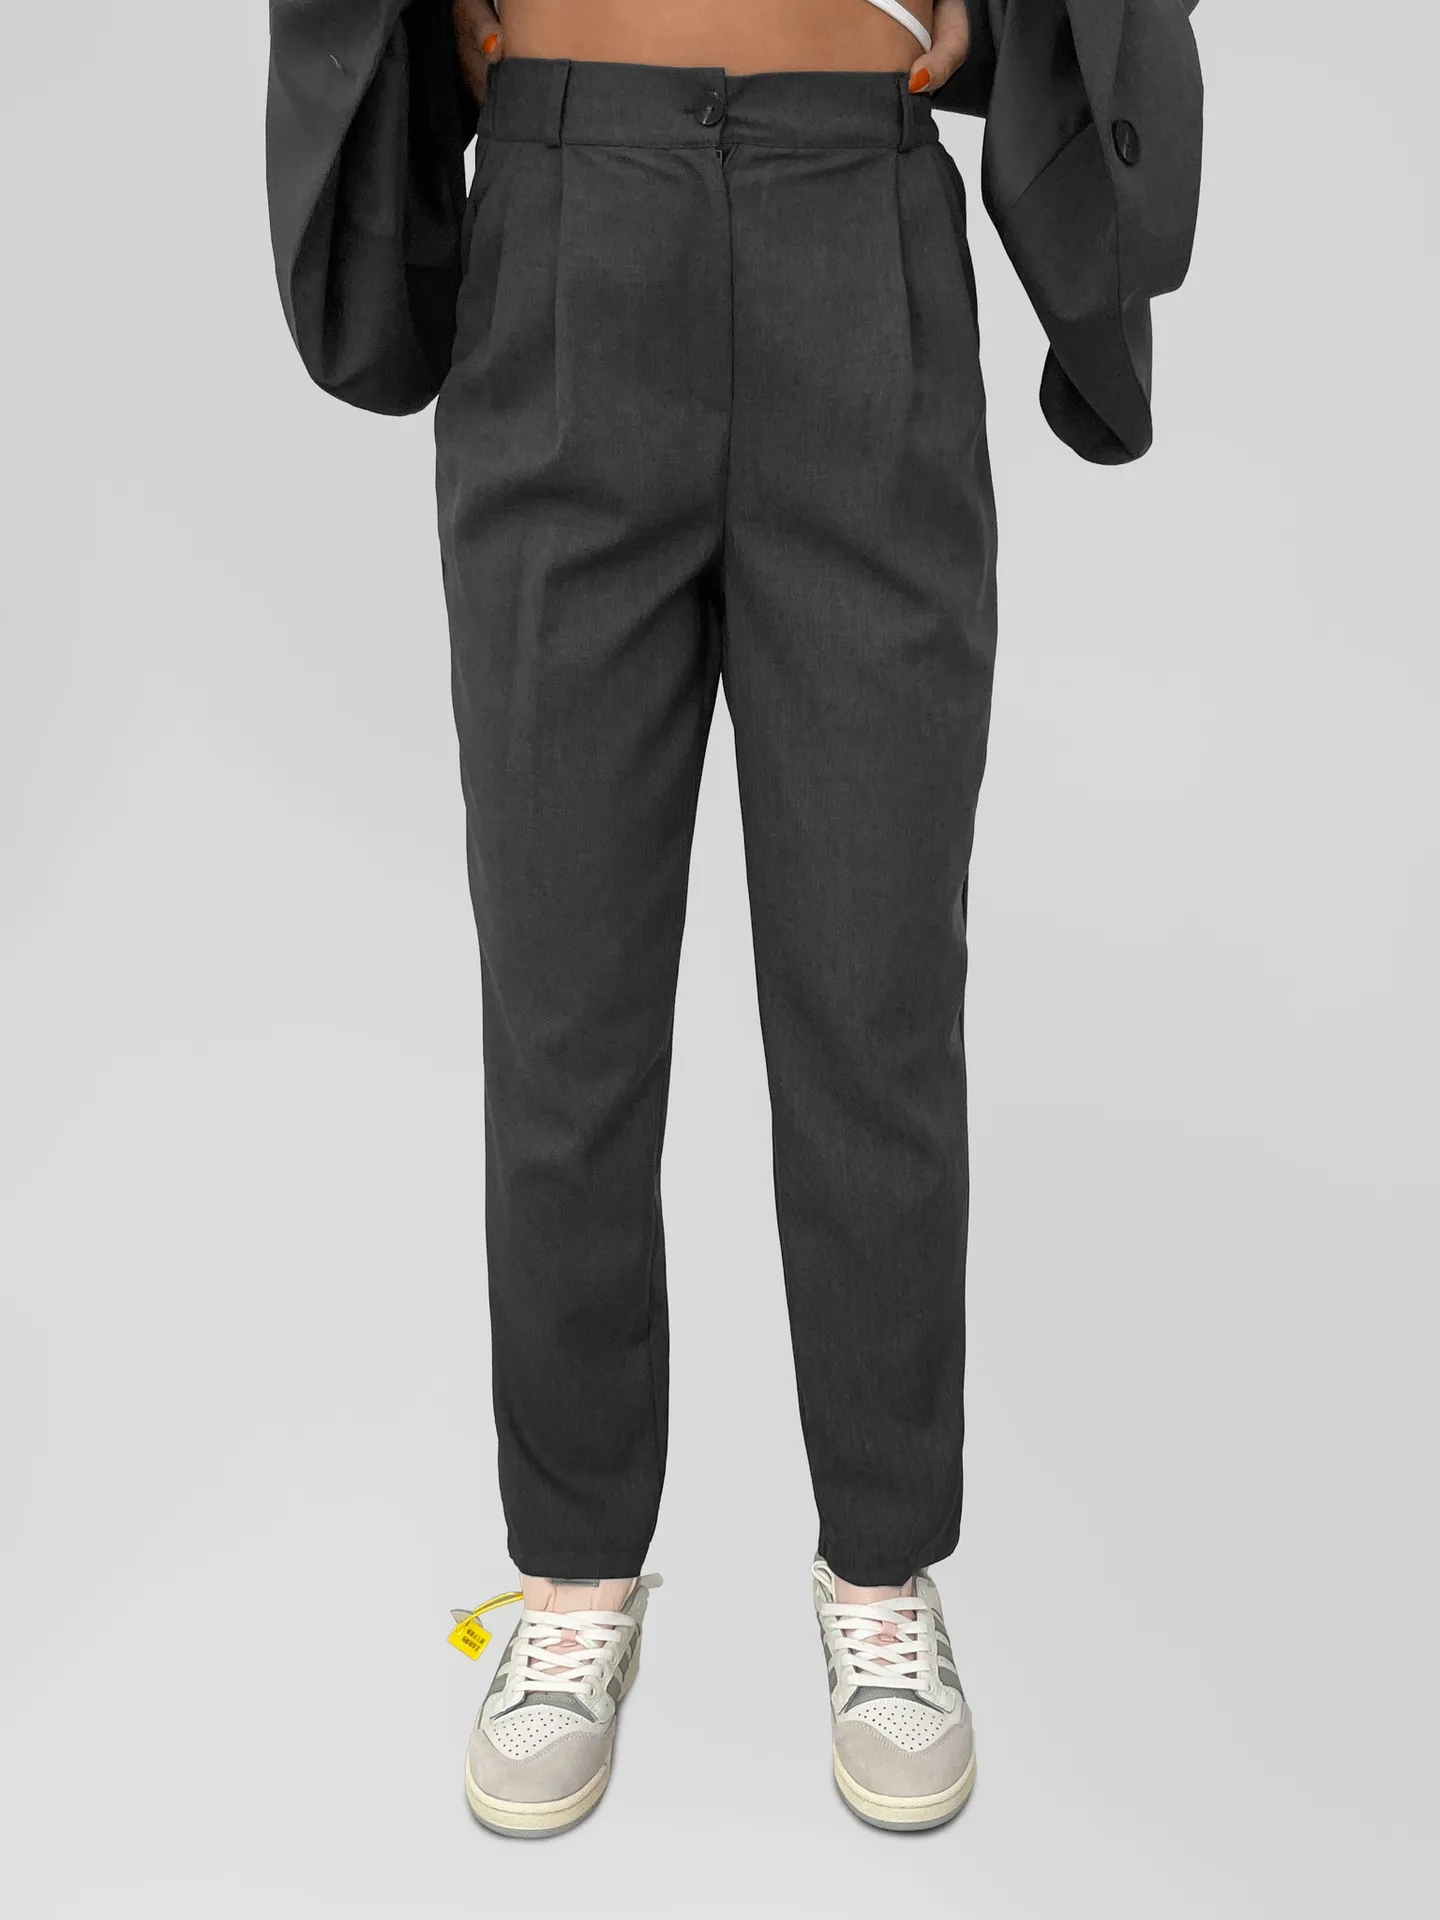 Костюм Bony Style из свободного пиджака на одну пуговицу и зауженных брюк